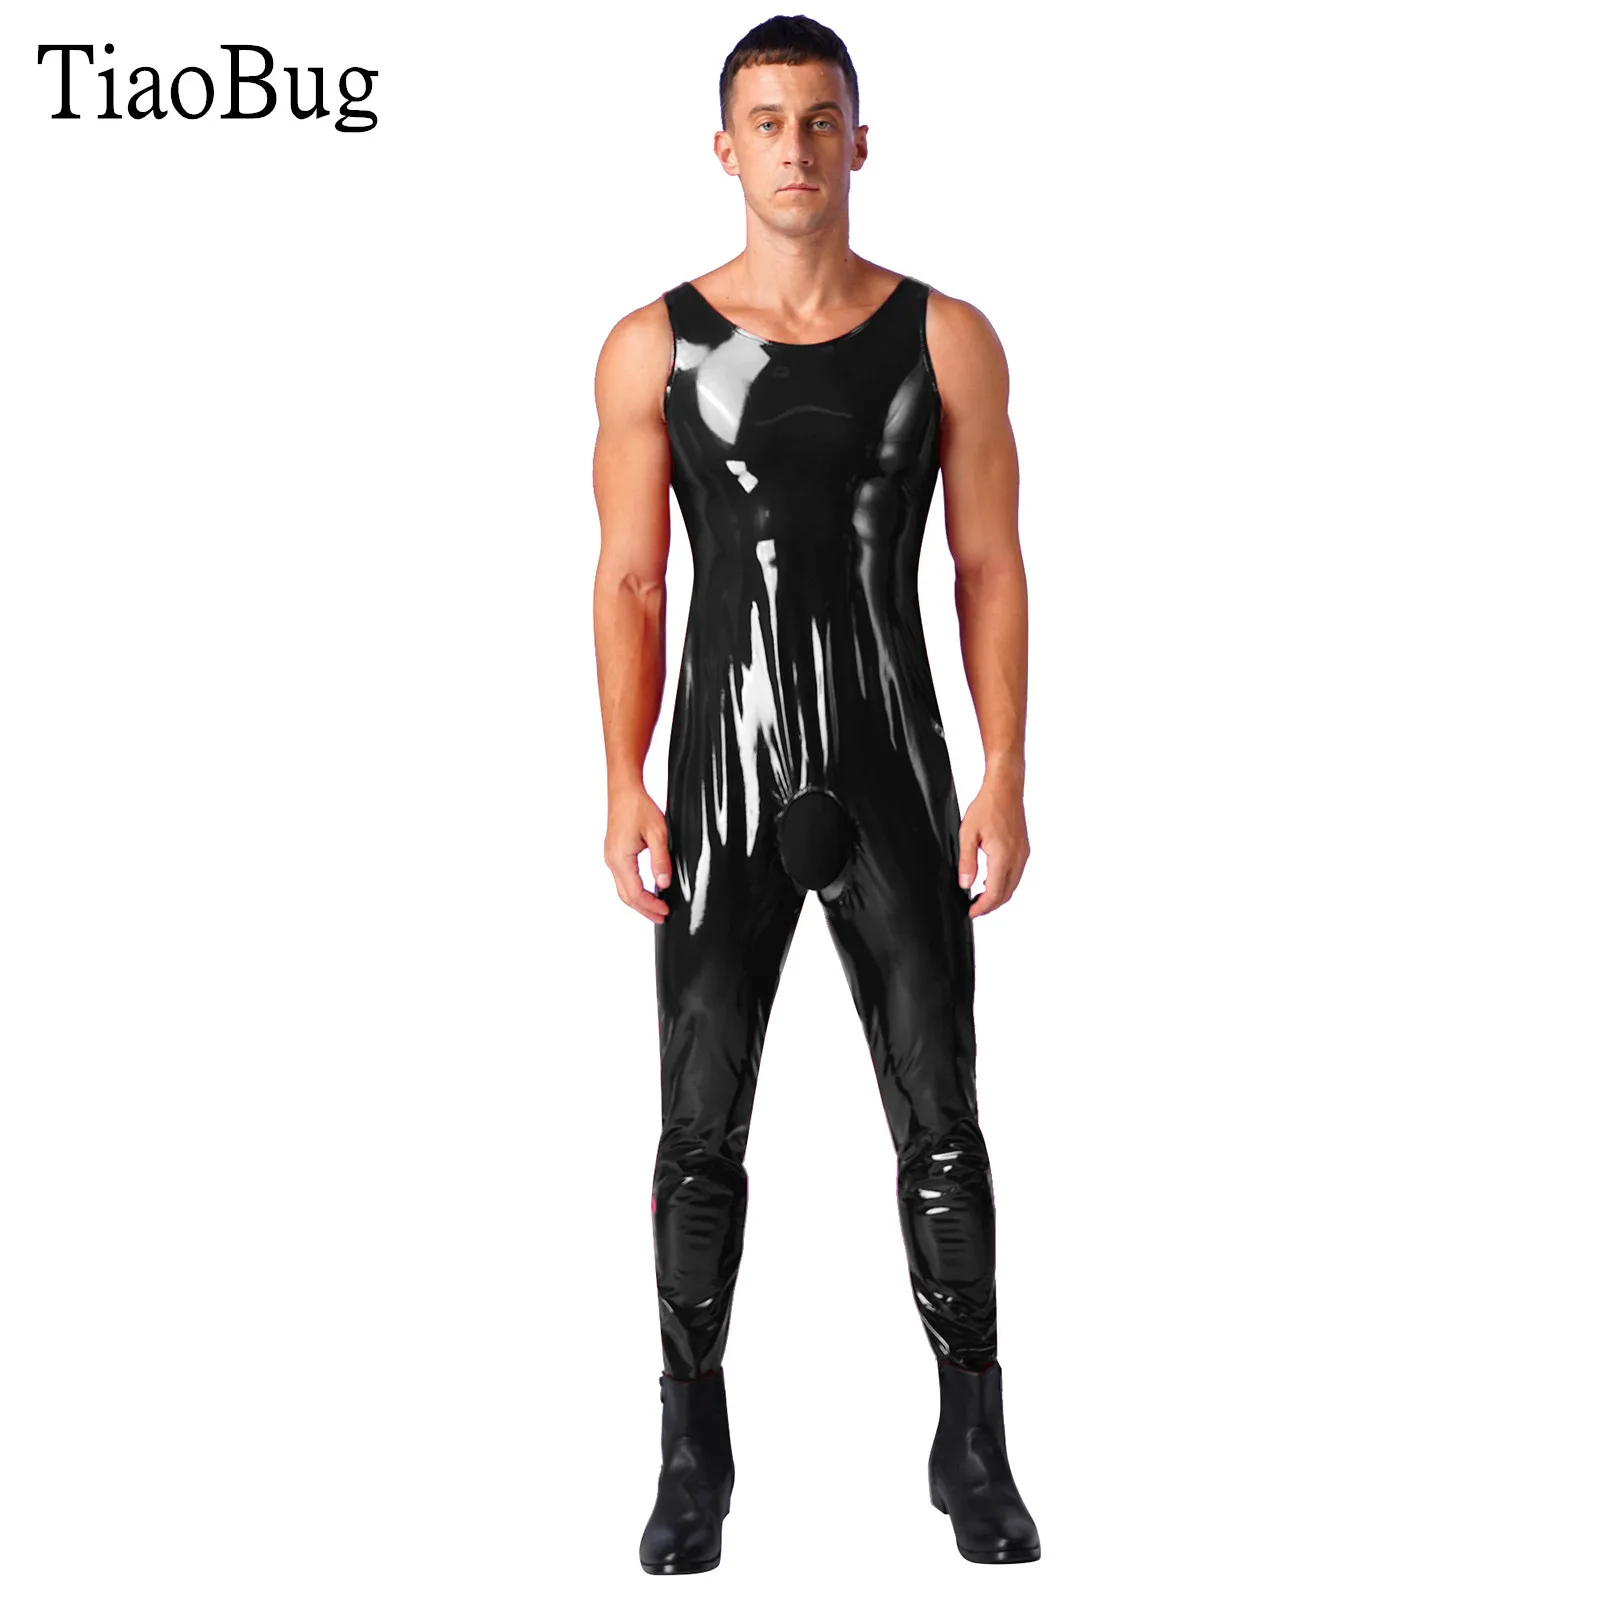 

Mens One-piece Wet Look Patent Leather Bodysuit U Neck Sleeveless Crotchless Catsuit Leotard Jumpsuit Clubwear